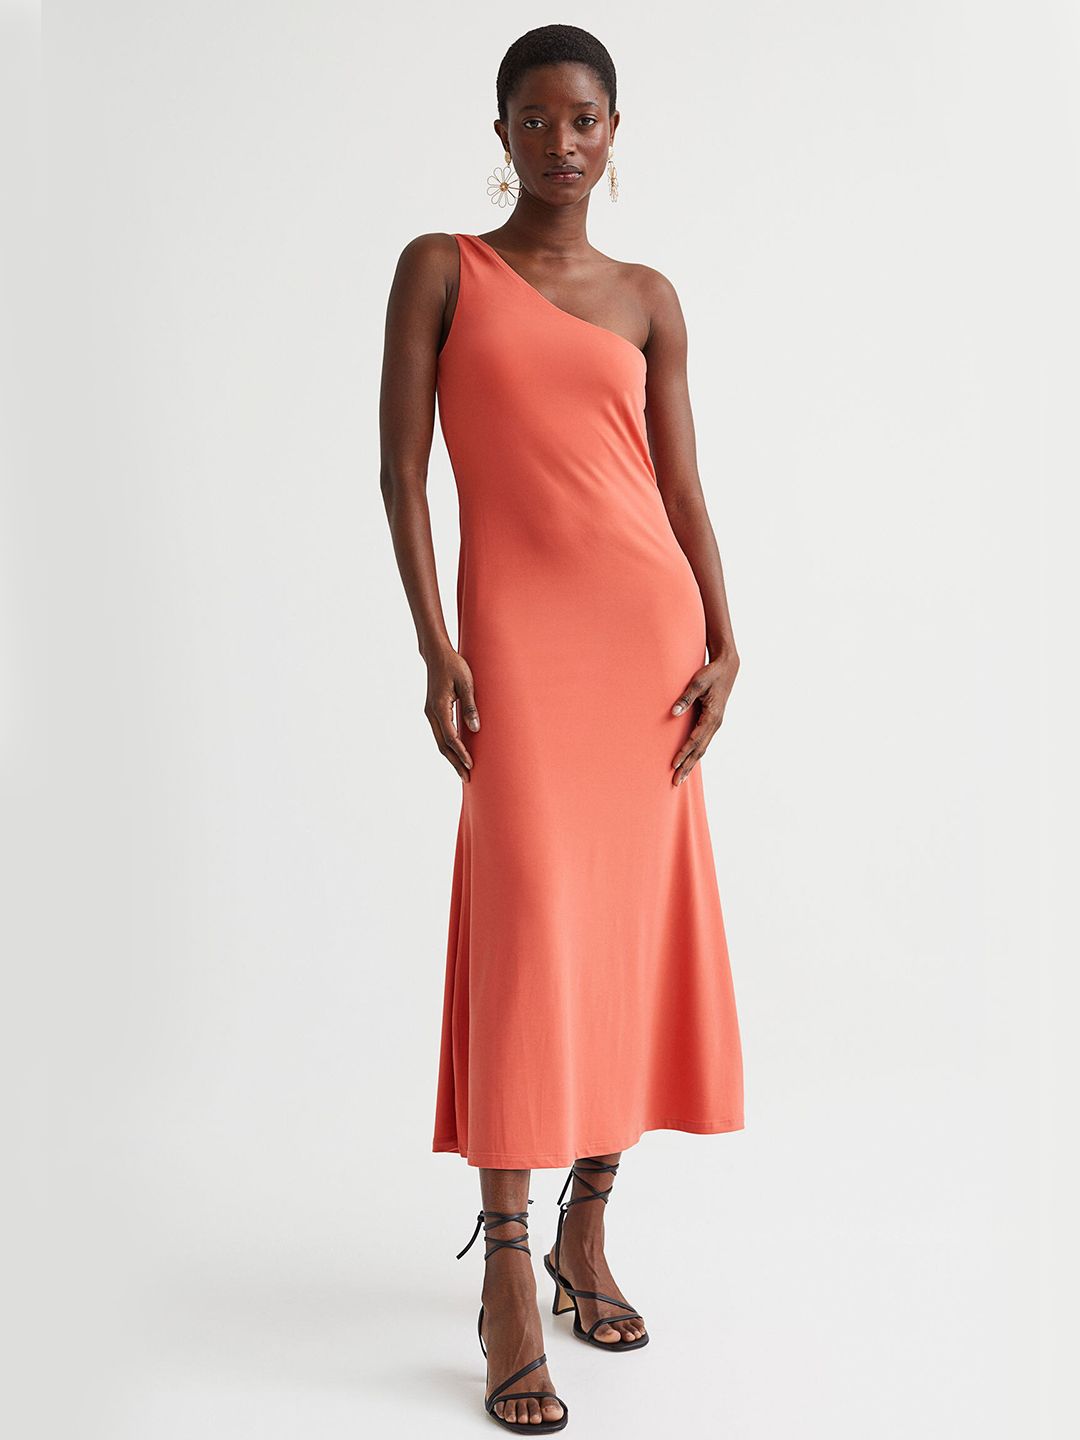 H&M Orange One-Shoulder Dress Price in India